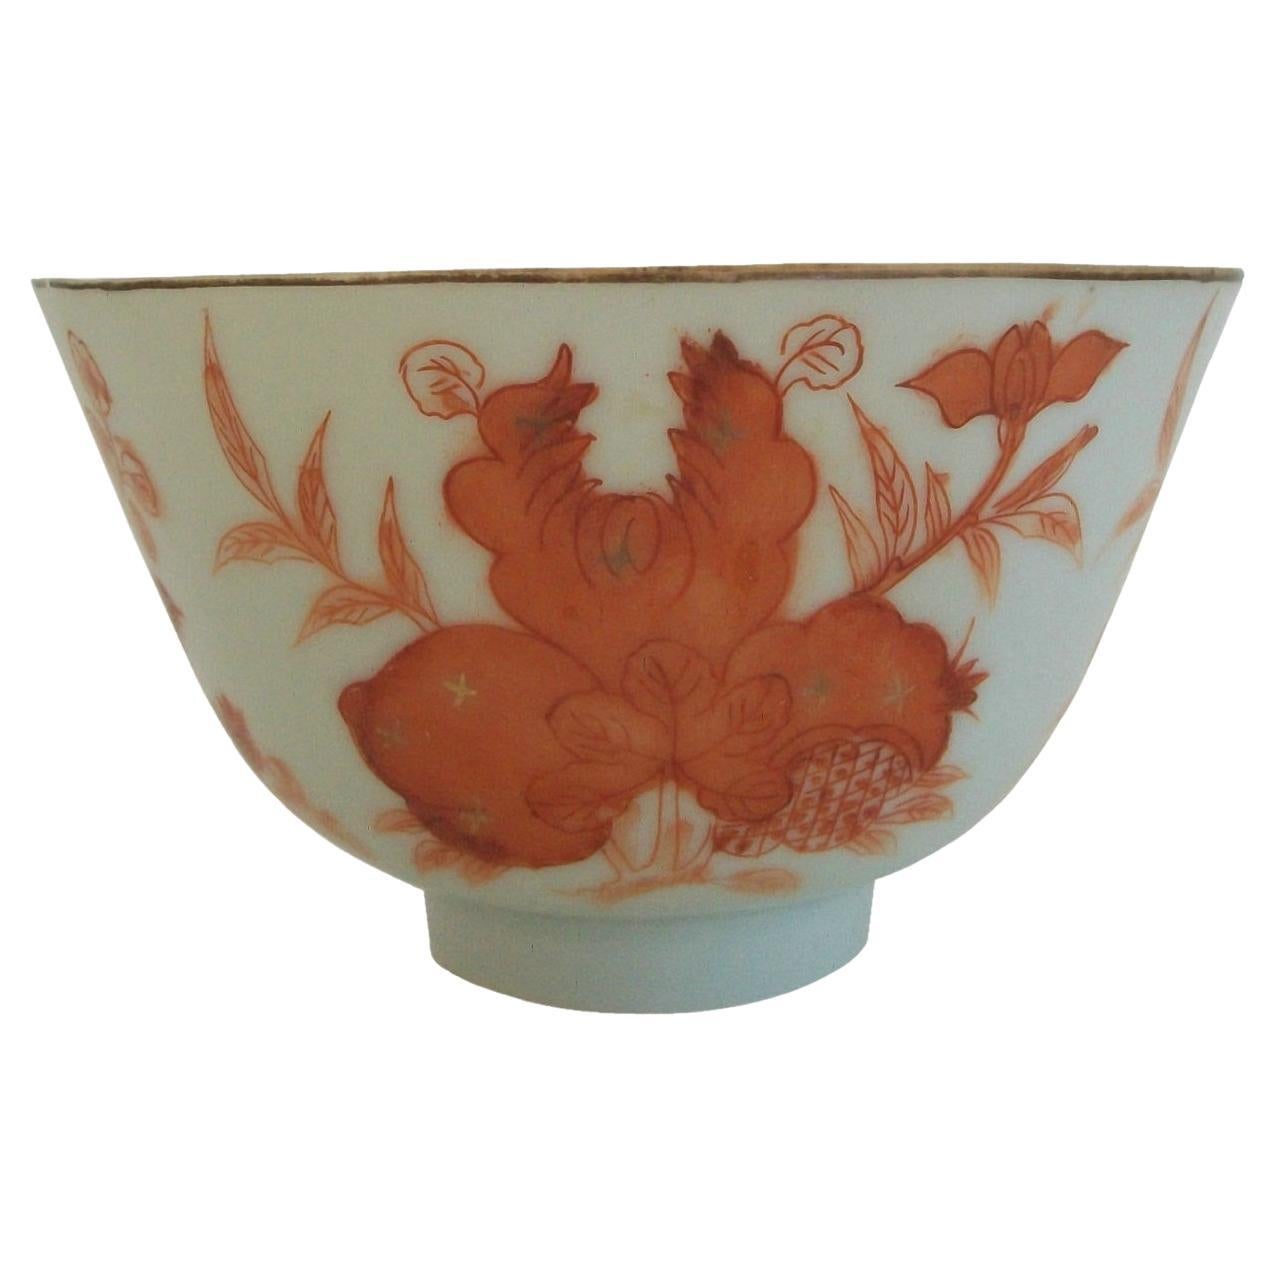 Iron Red & Gilt Decorated Porcelain Bowl - Guangxu Mark, China, 20th Century